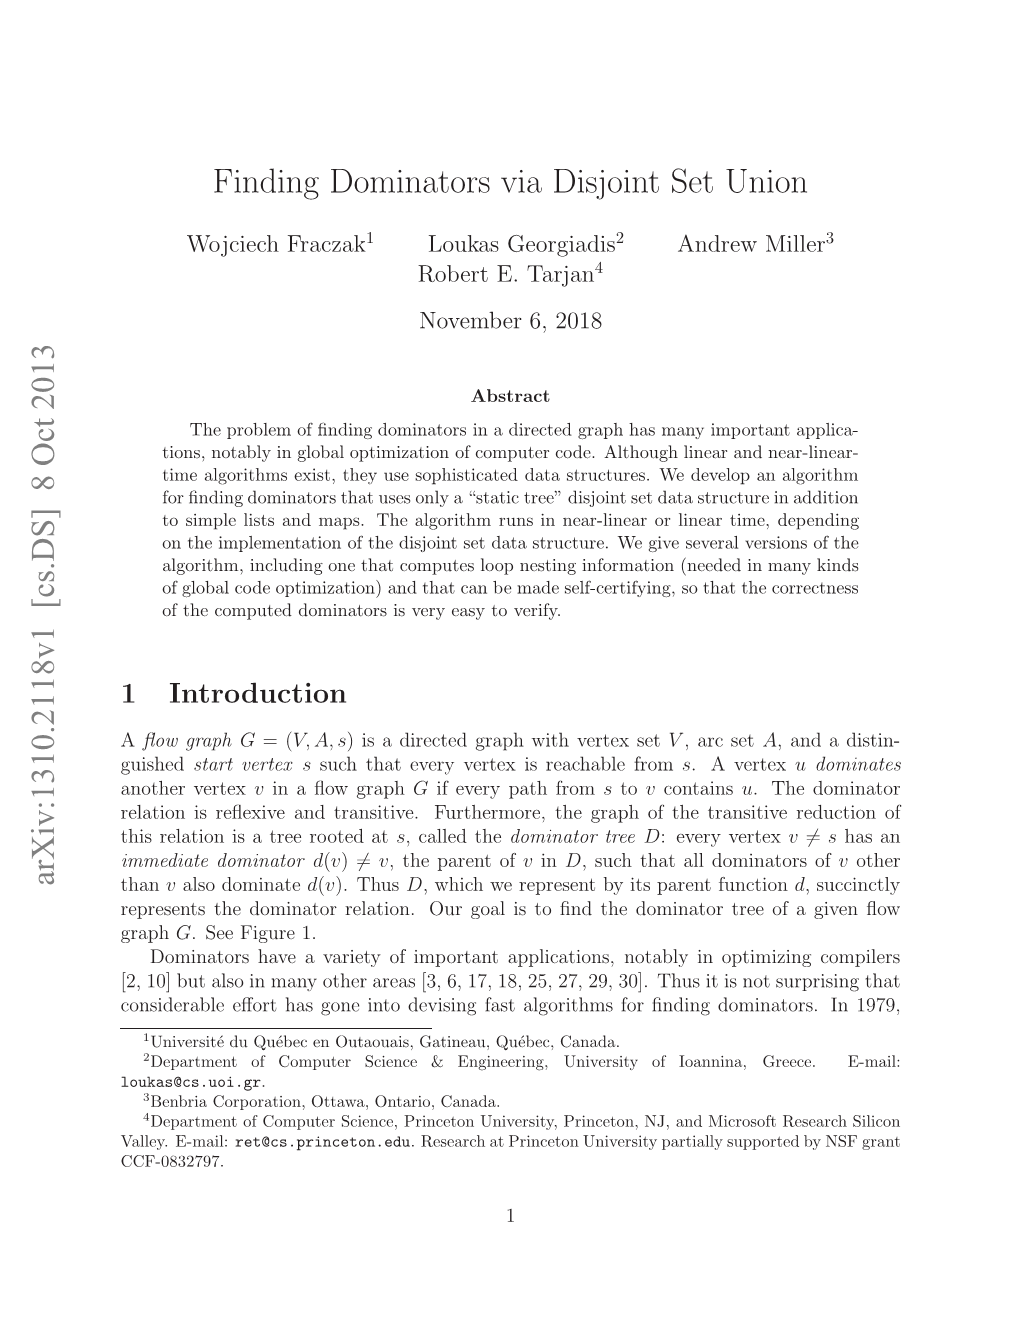 Finding Dominators Via Disjoint Set Union